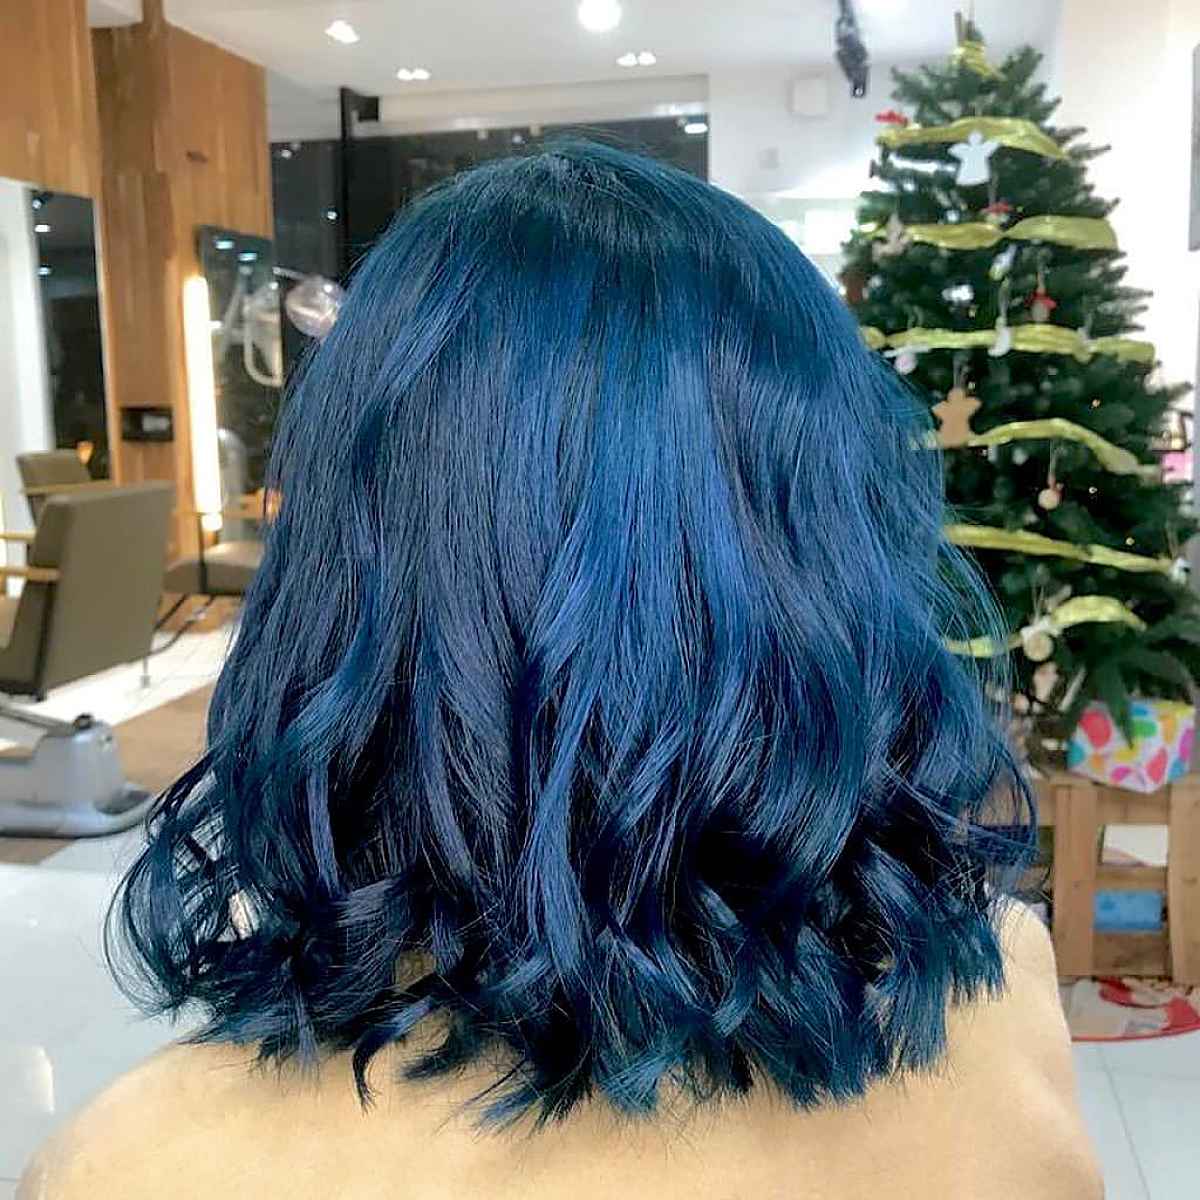 Moonlight Blue hair color